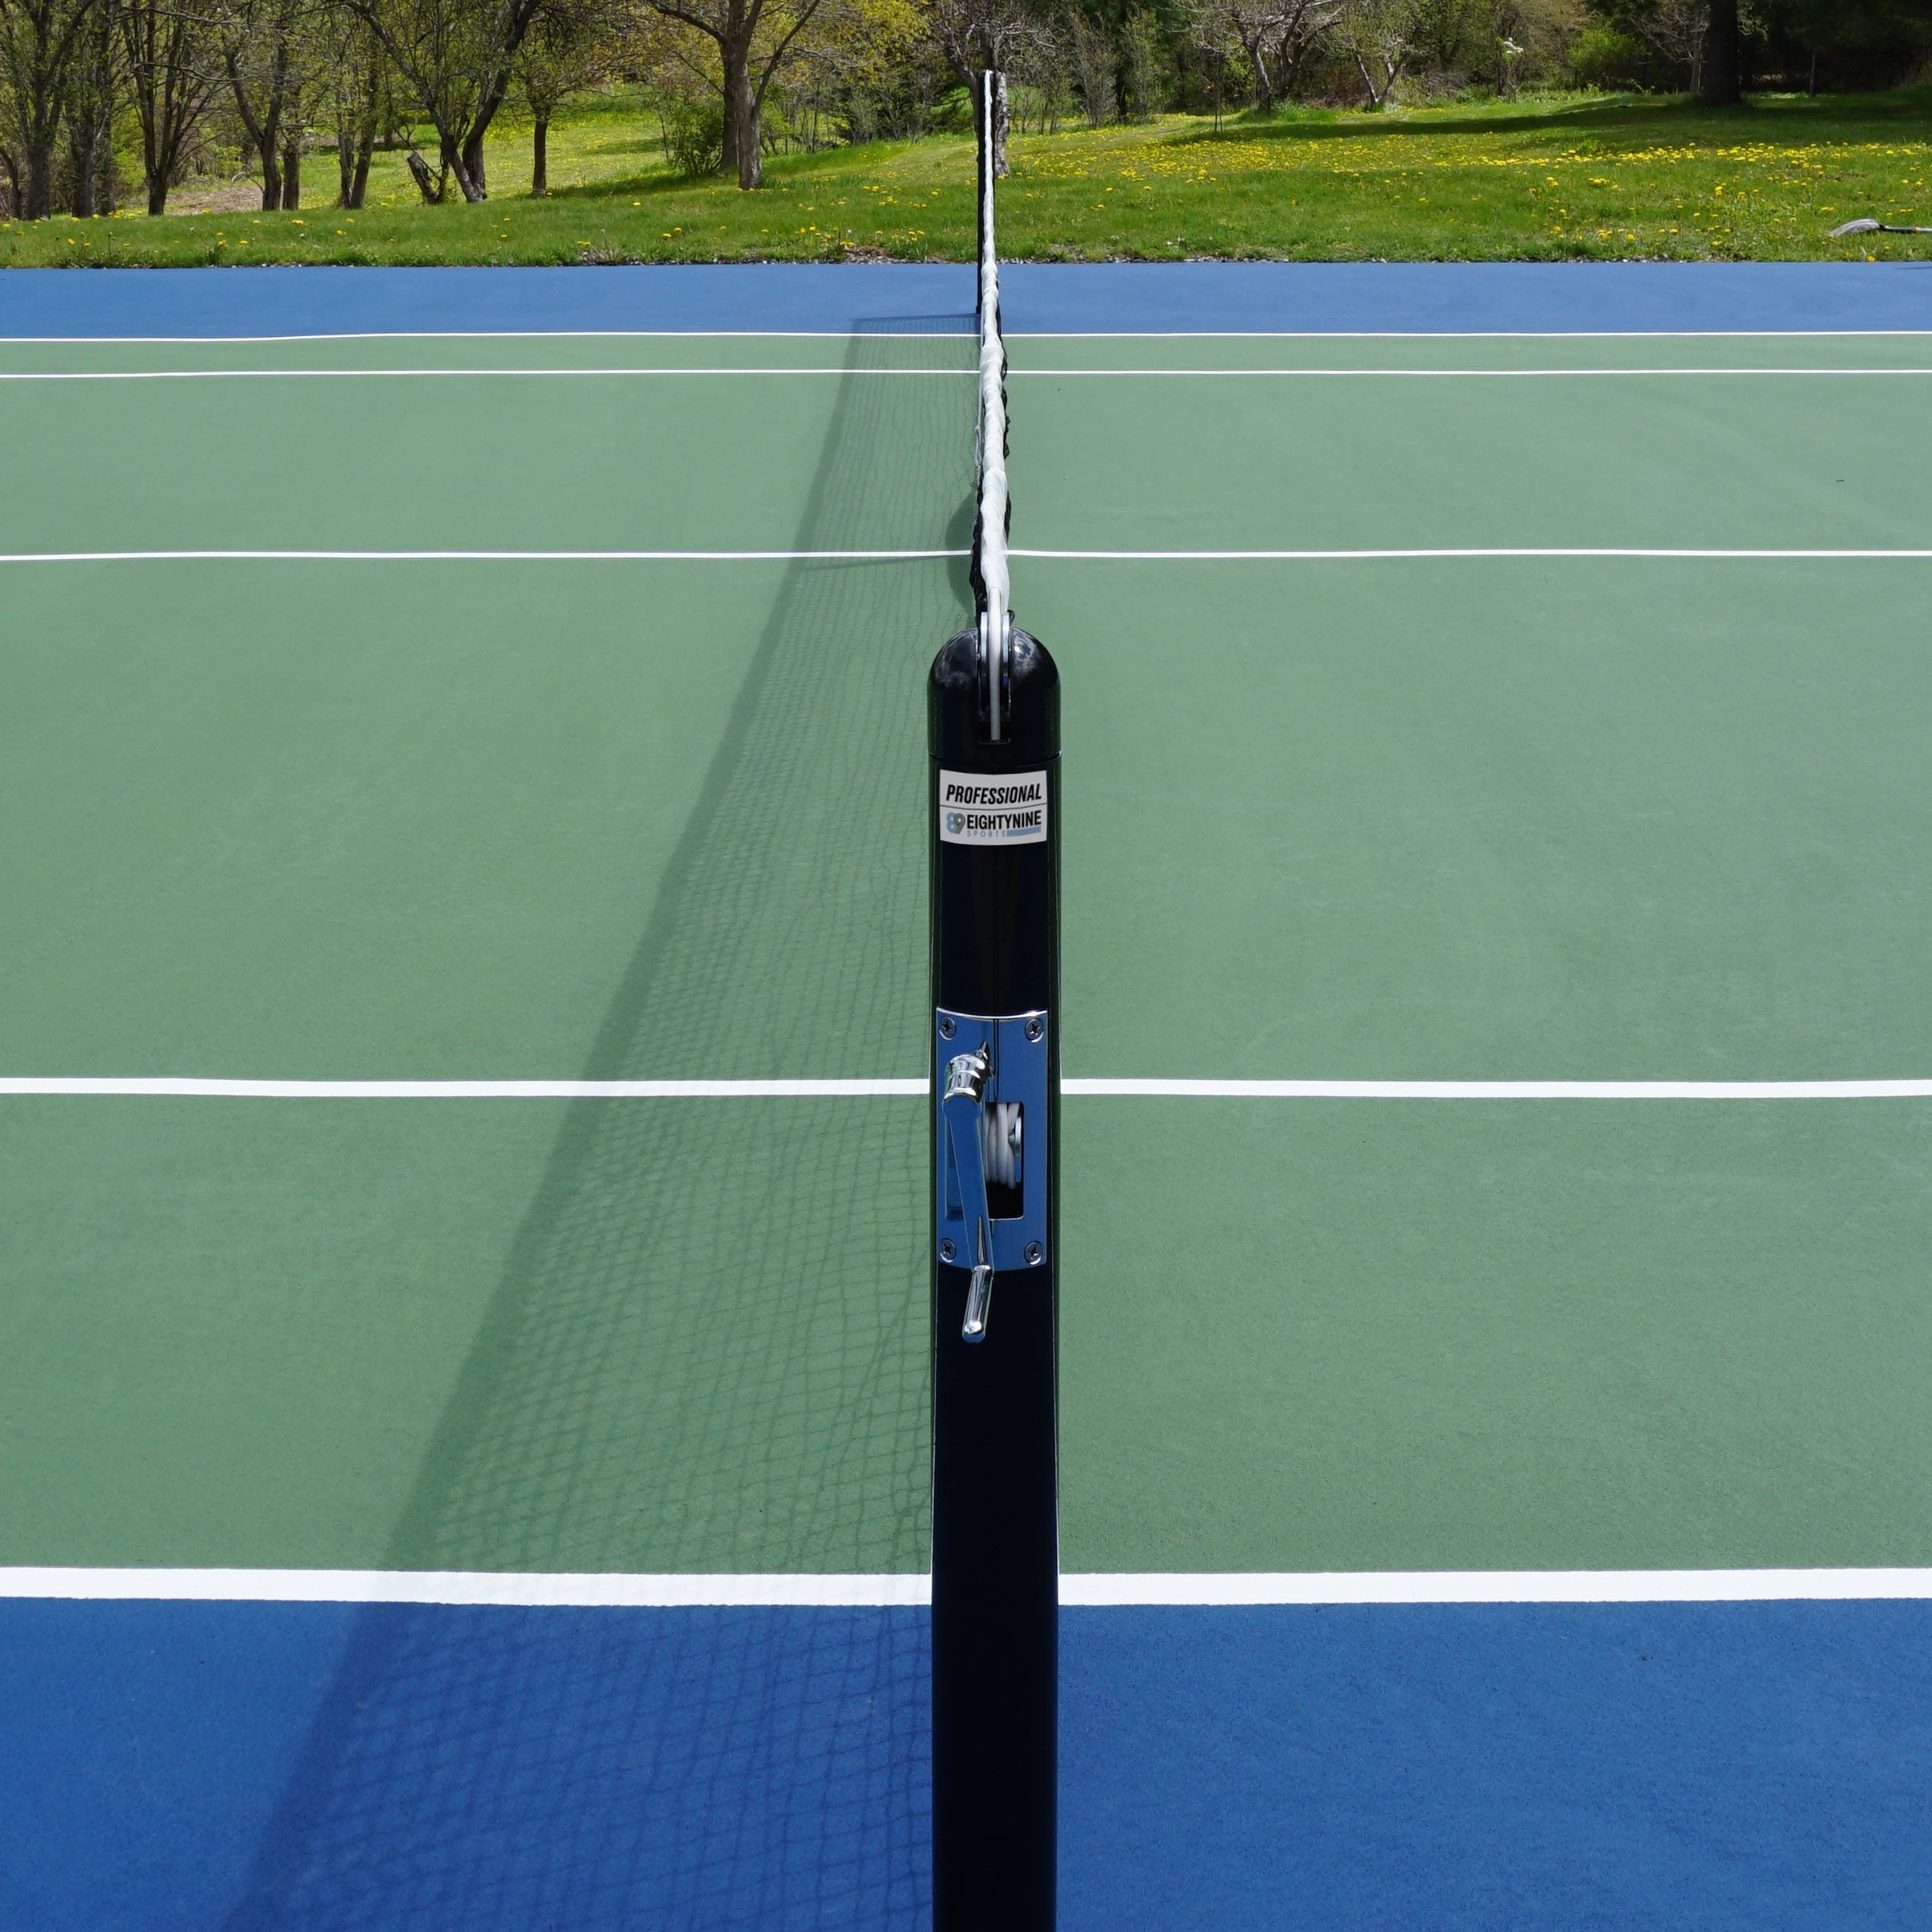 EIGHTYNINE Sports - Professional Tennis Posts - 3" Diameter - DIY Court Canada